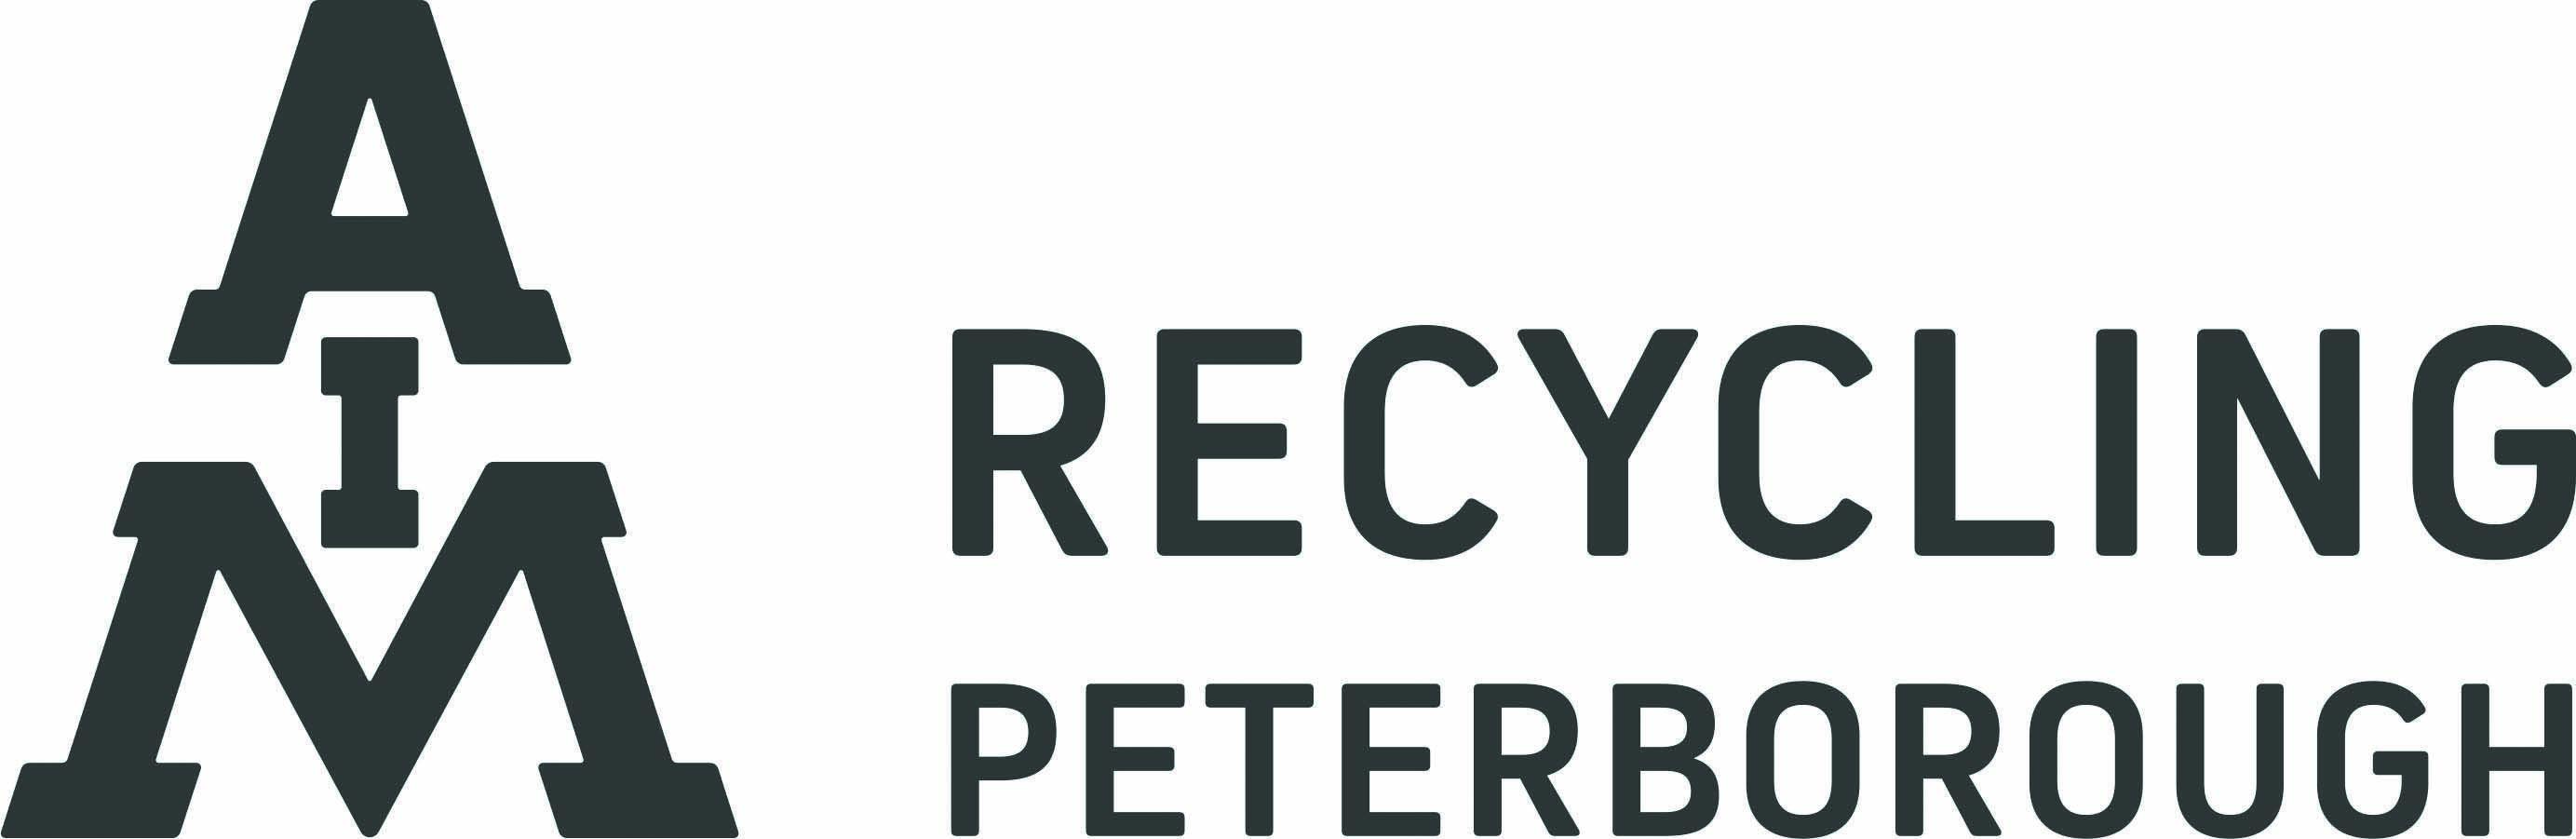 AIM_Recycling-Peterborough-horizontal-CMYK_(1).jpg